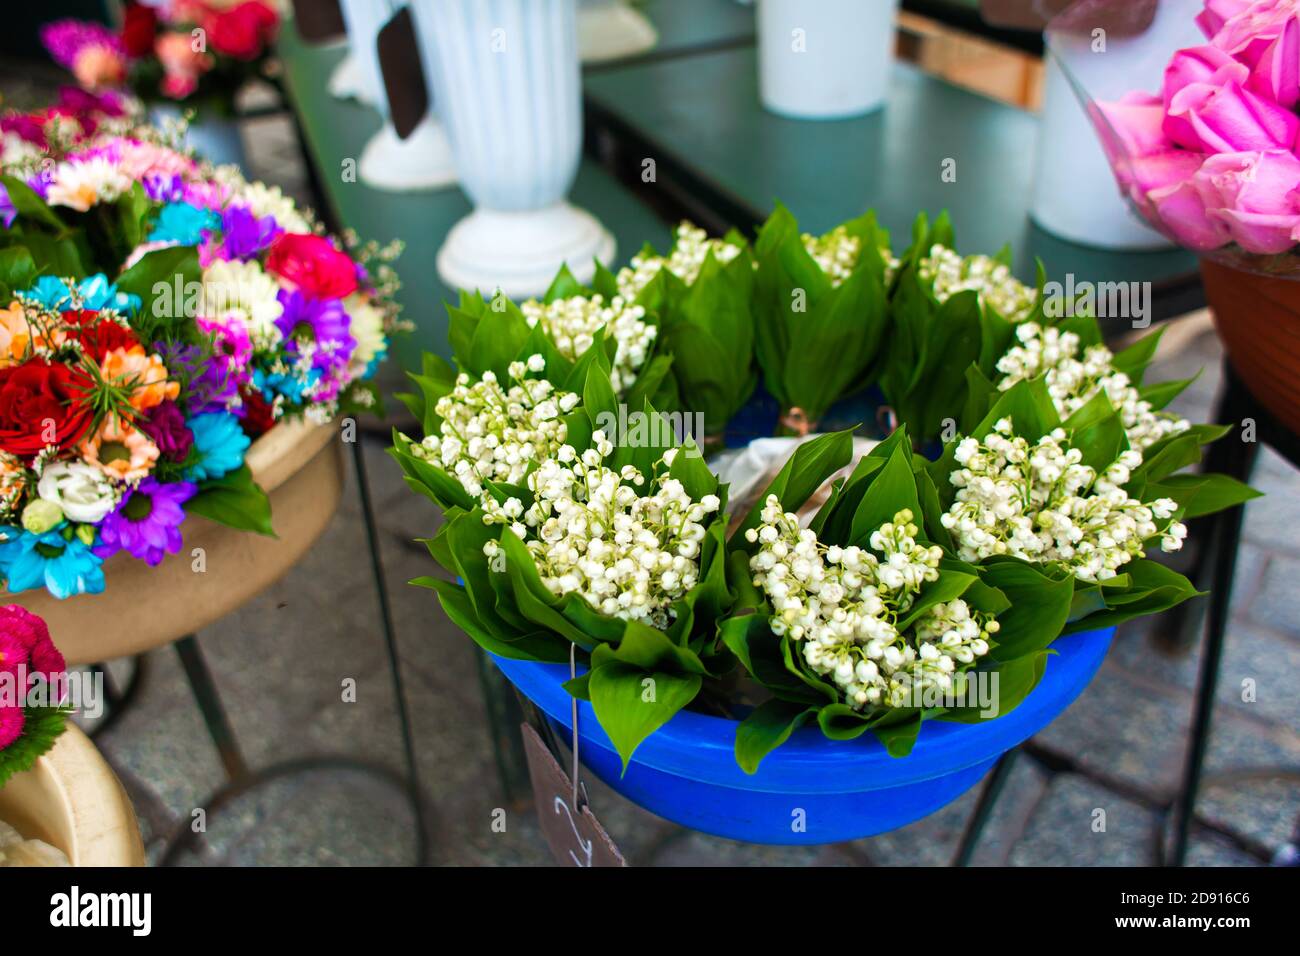 Street flower shop. Flowers in vases on the street. Stock Photo